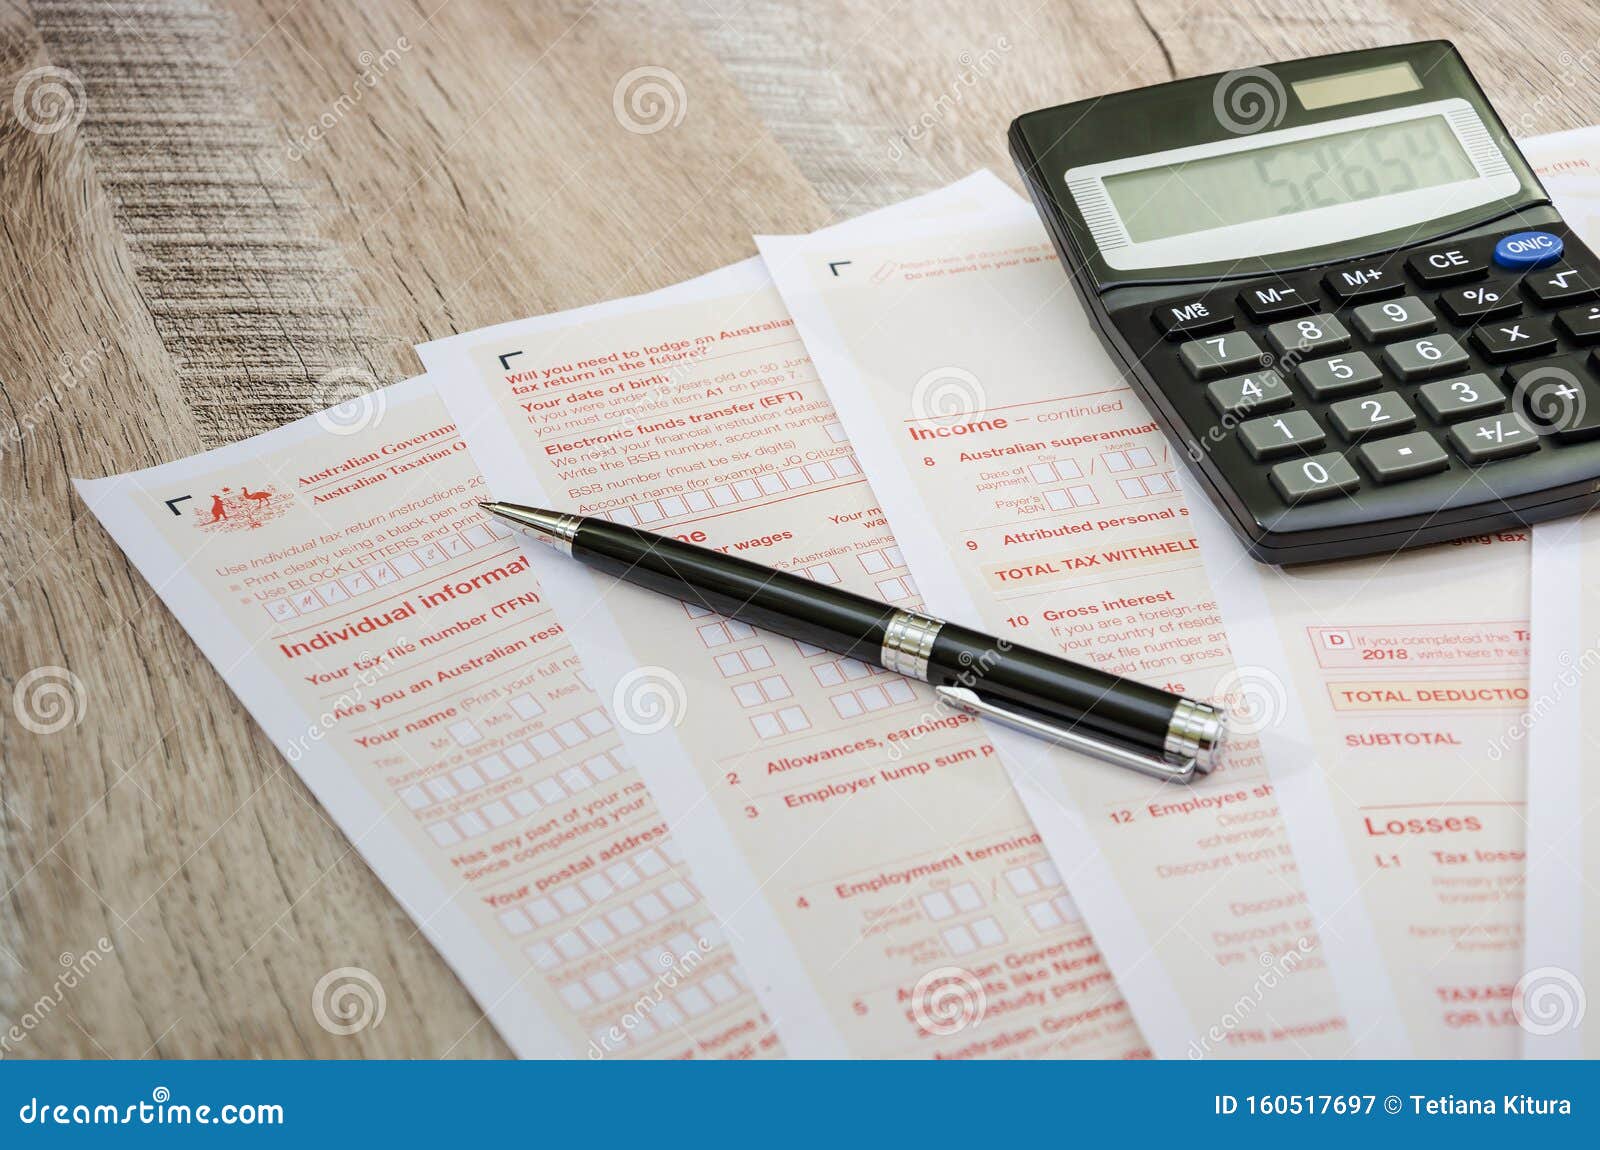 australian-tax-return-calculator-pen-on-a-wooden-table-close-up